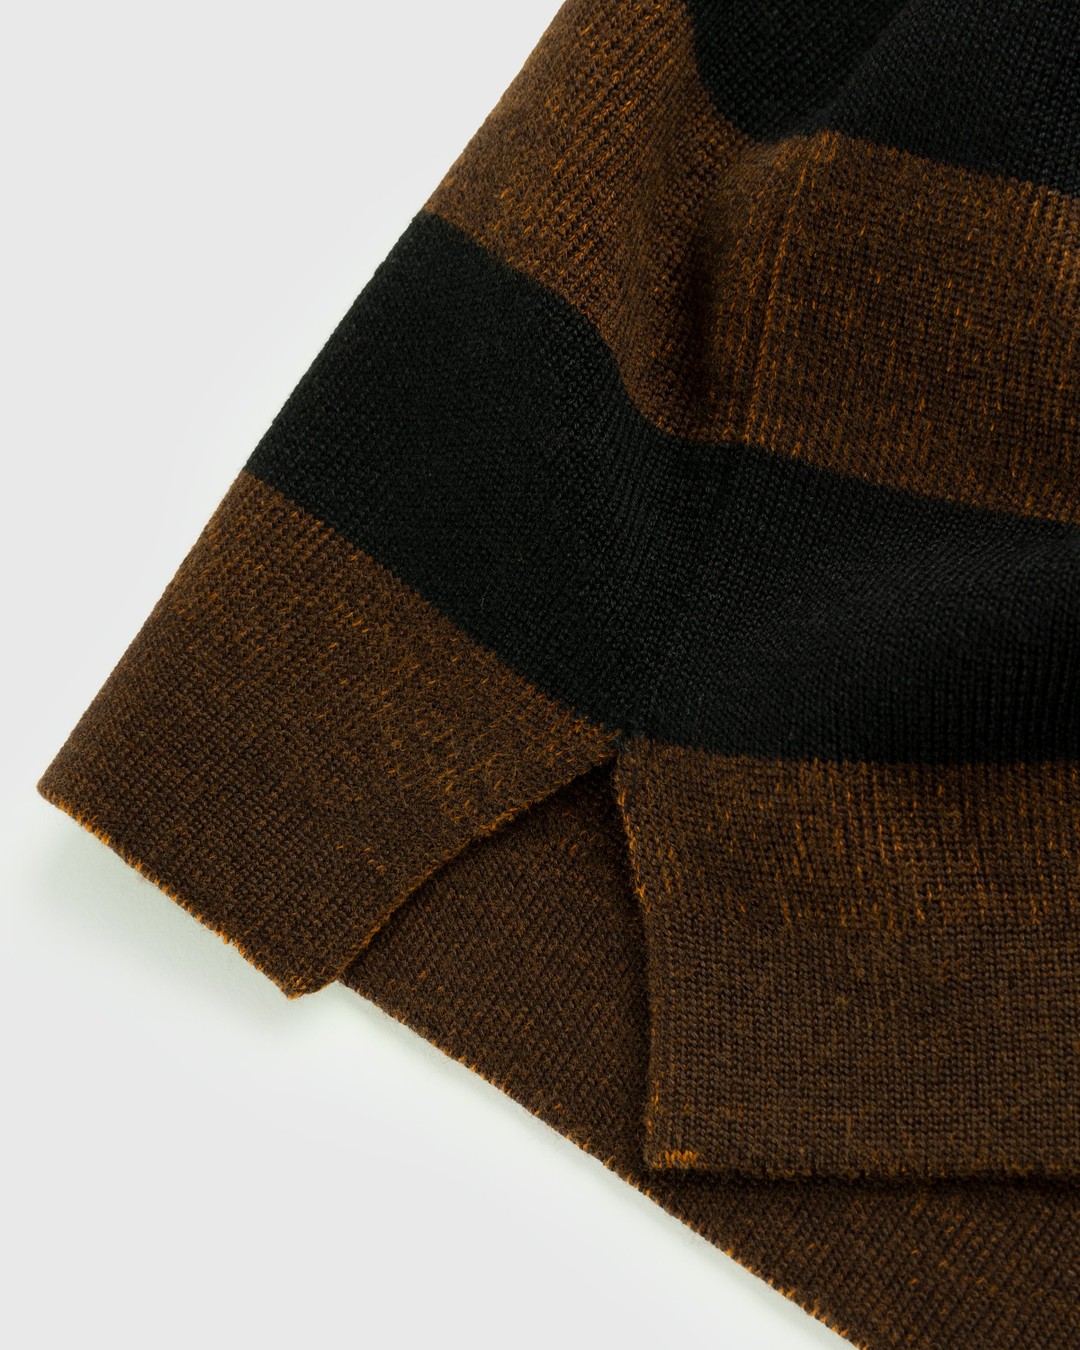 Kenzo – Striped Merino Wool Polo Dark Camel - Shirts - Brown - Image 3